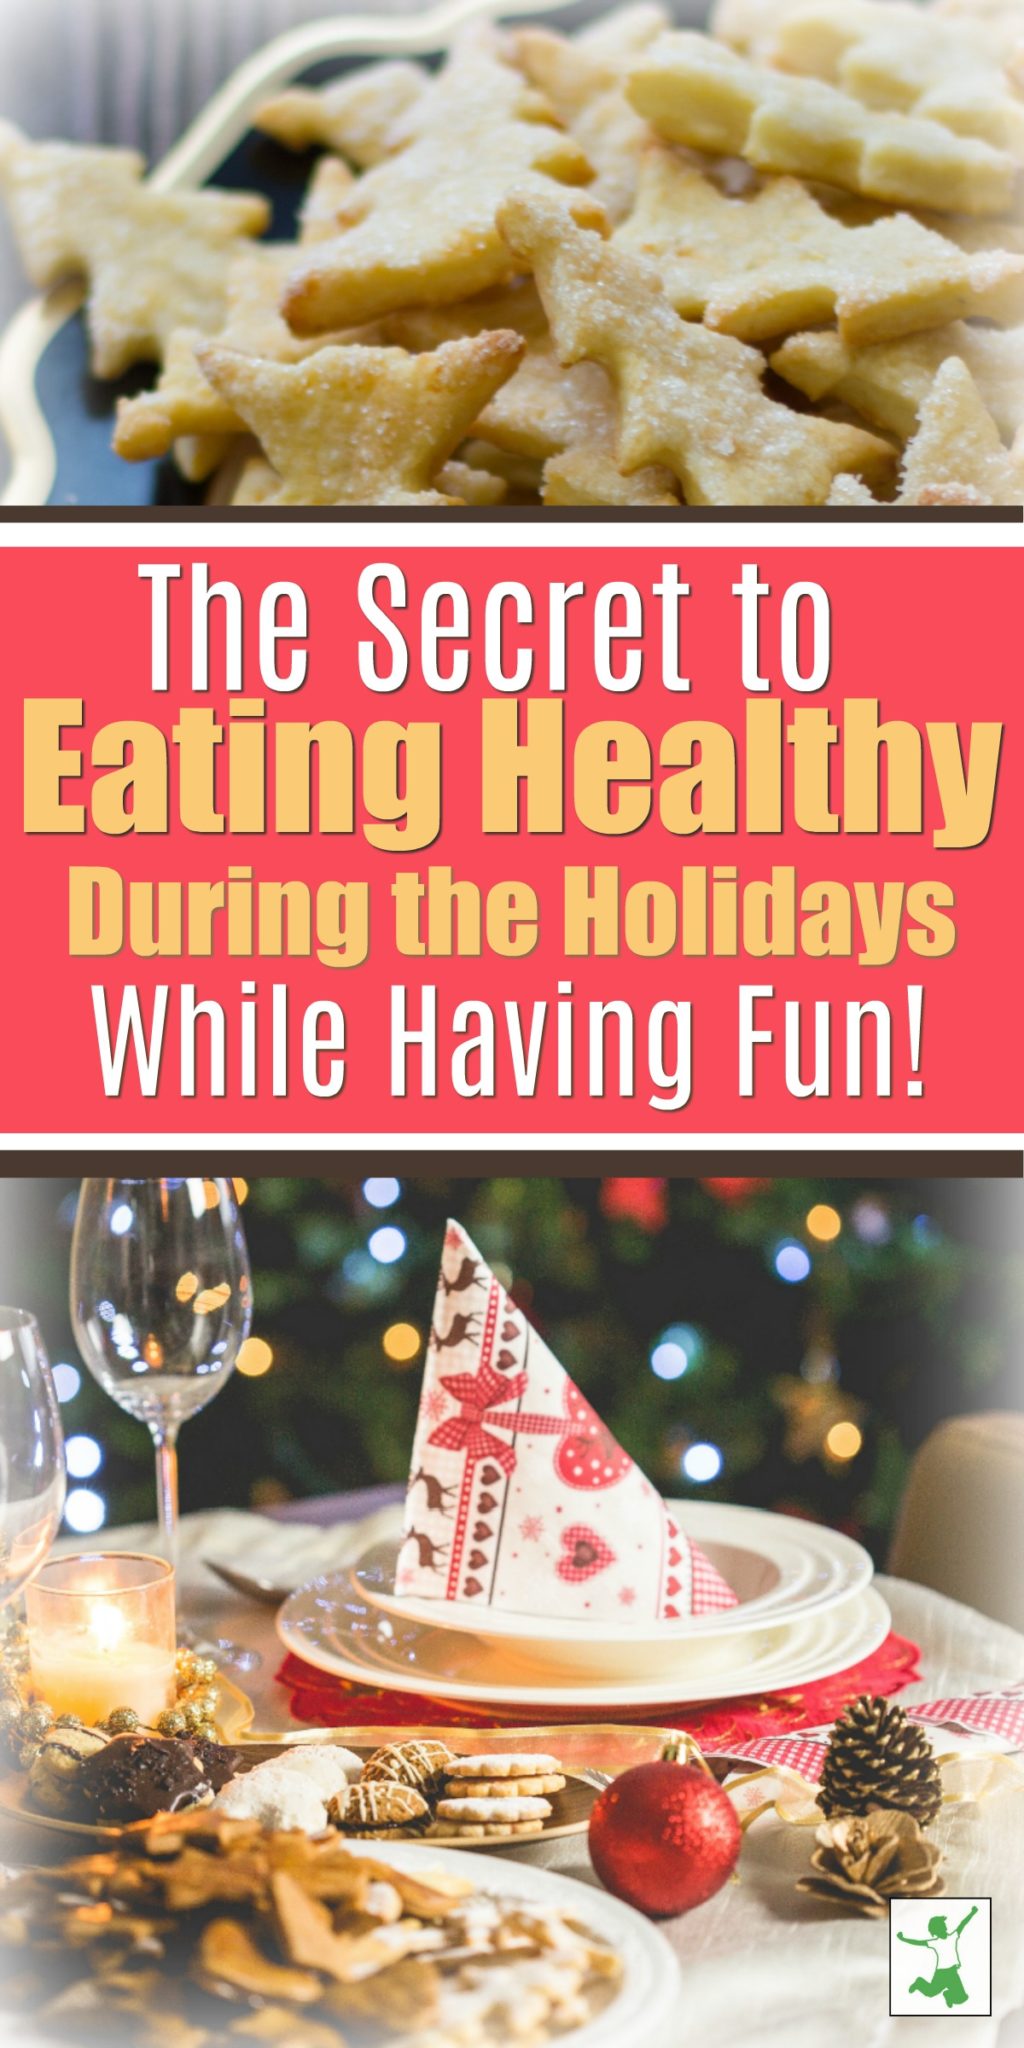 healthy and fun holiday eating